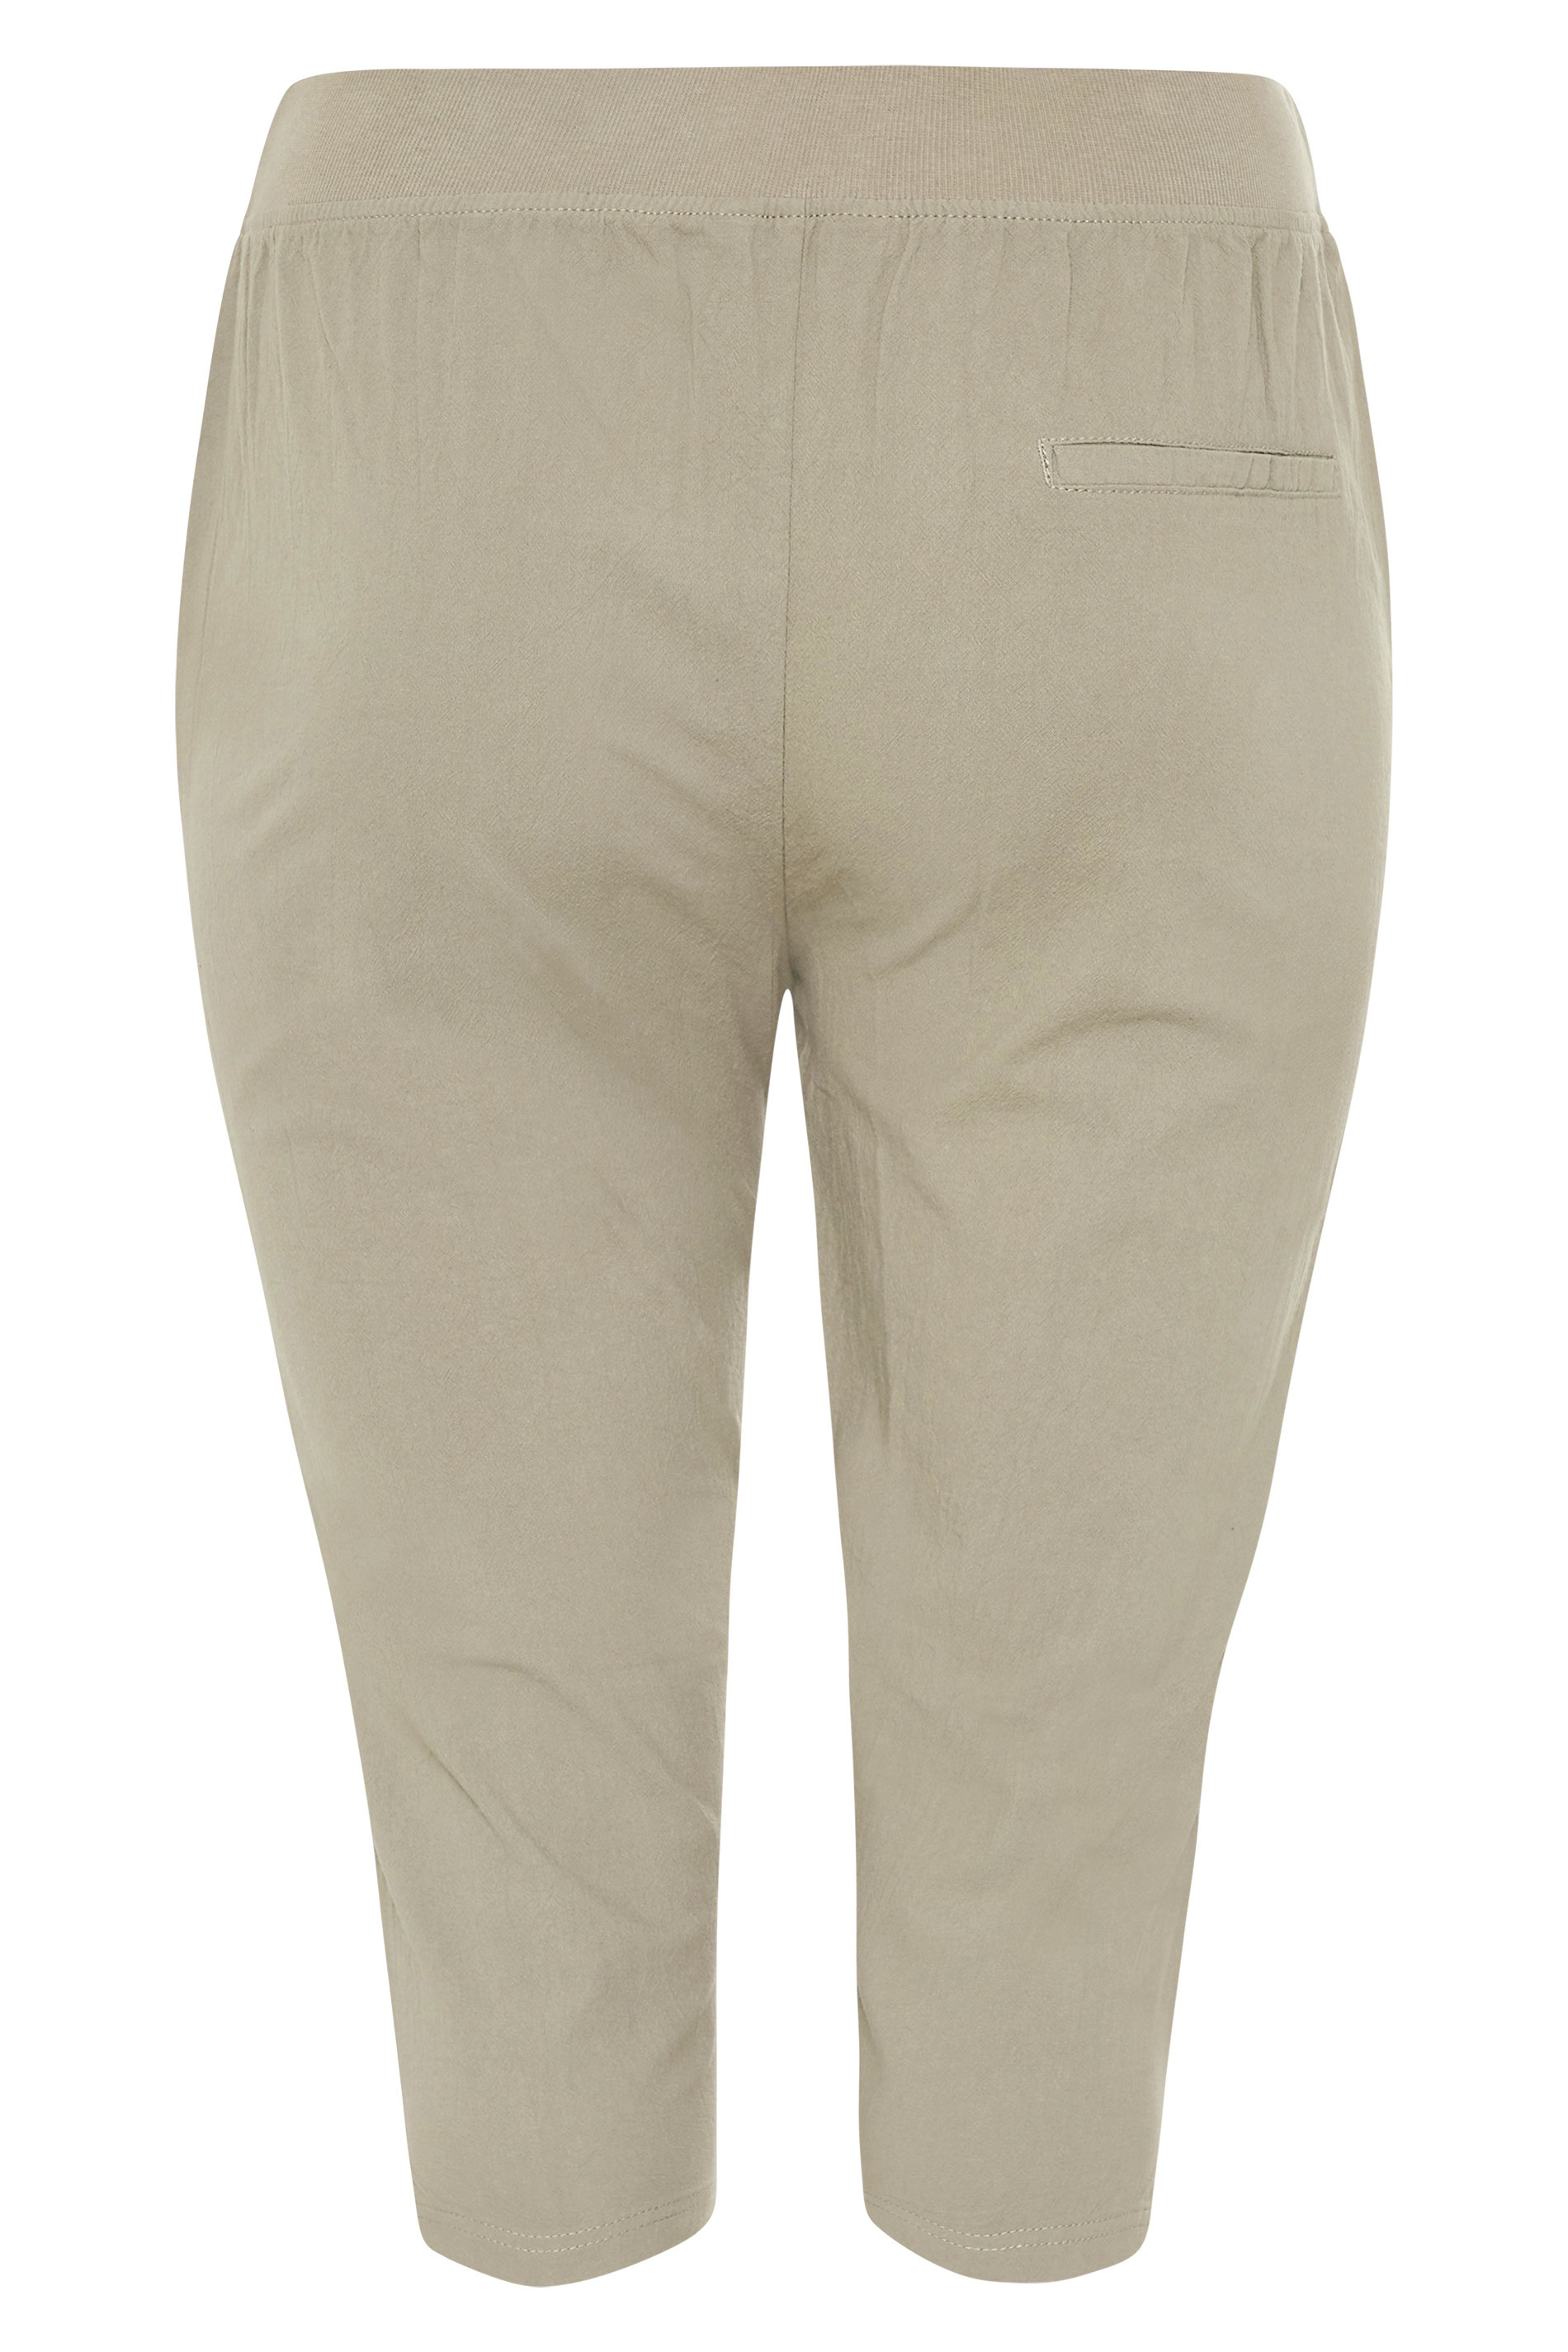 Grande taille  Pantalons Grande taille  Joggings | Jogging Vert Kaki Style Pantacourt - KQ96003